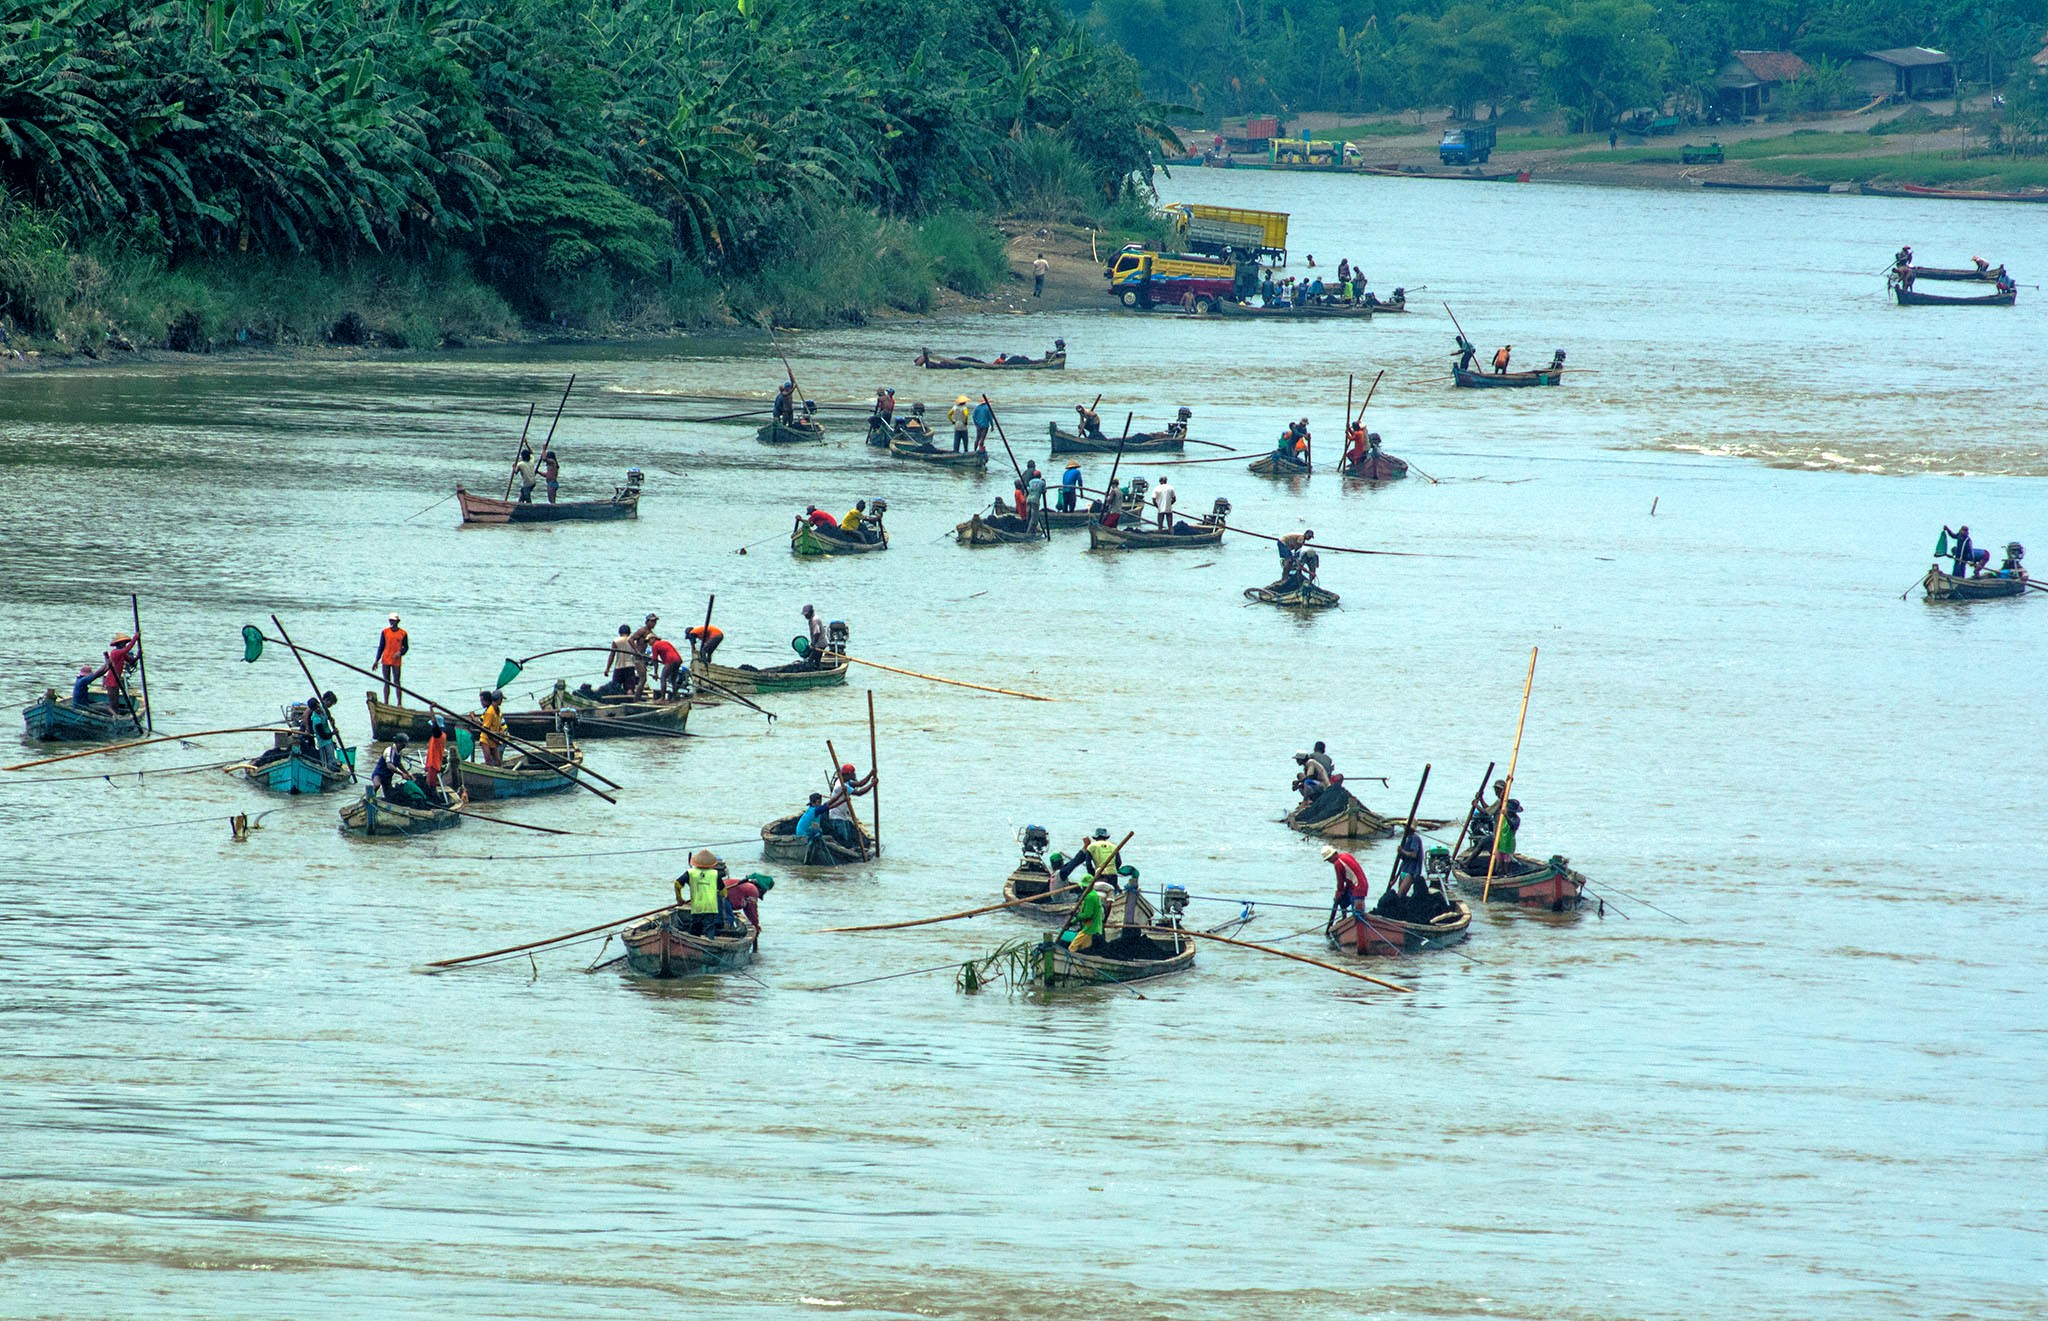 Puluhan perahu berisi penambang pasir yang tidak jauh dari Jembatan Soeharto, Rawalo, Banyumas, Jawa Tengah. Aktivitas penambangan pasir ini merugikan lingkungan karena meningkatkan abrasi di sepanjang DAS Serayu. Foto : L Darmawan